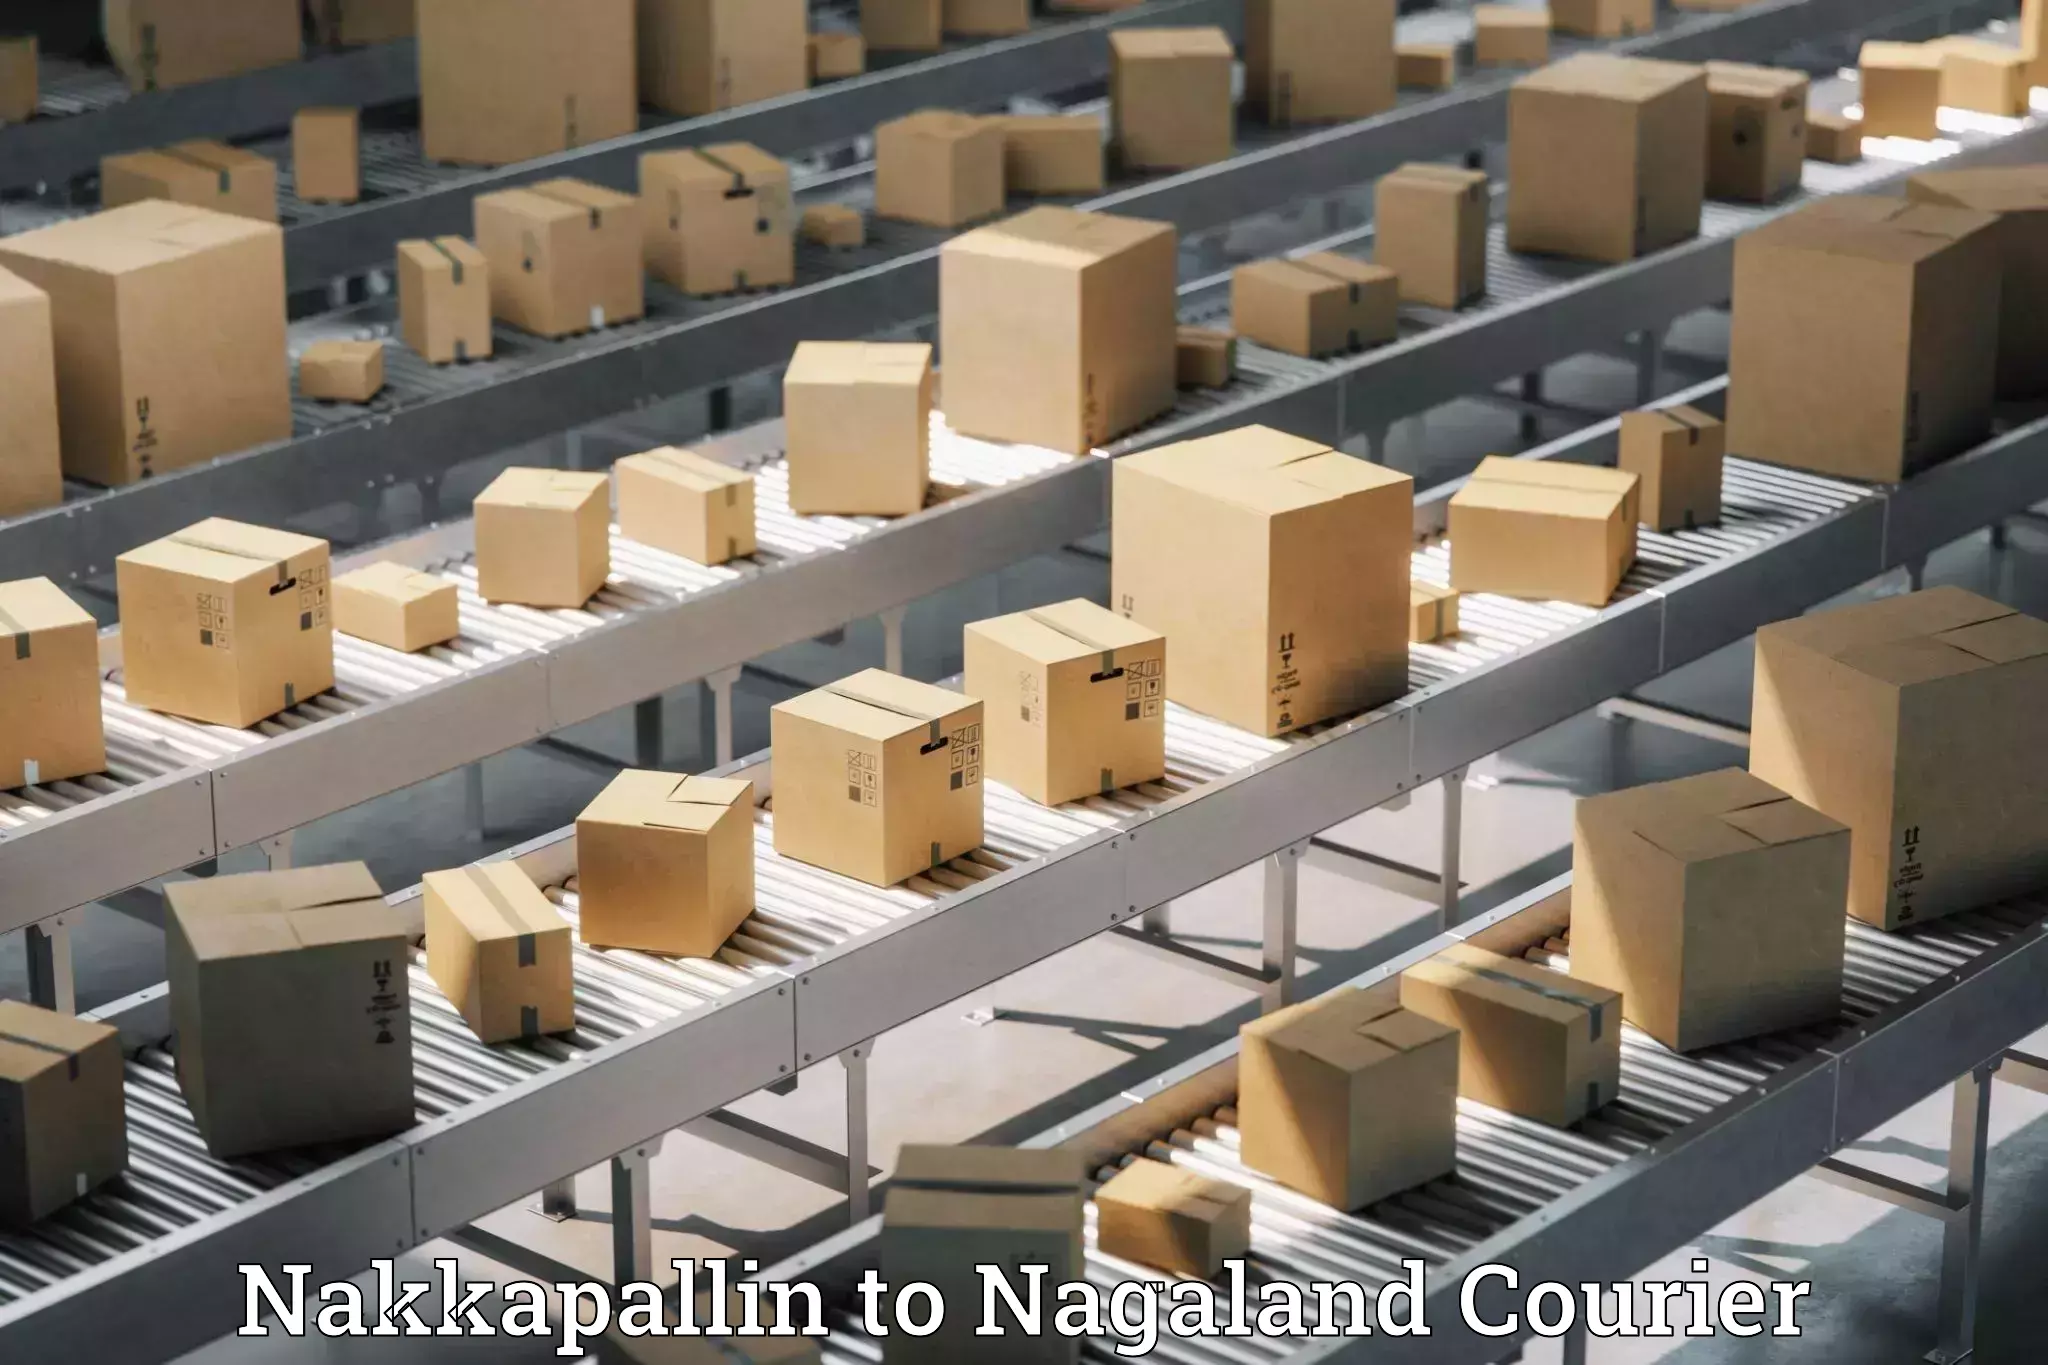 Courier service comparison Nakkapallin to Nagaland